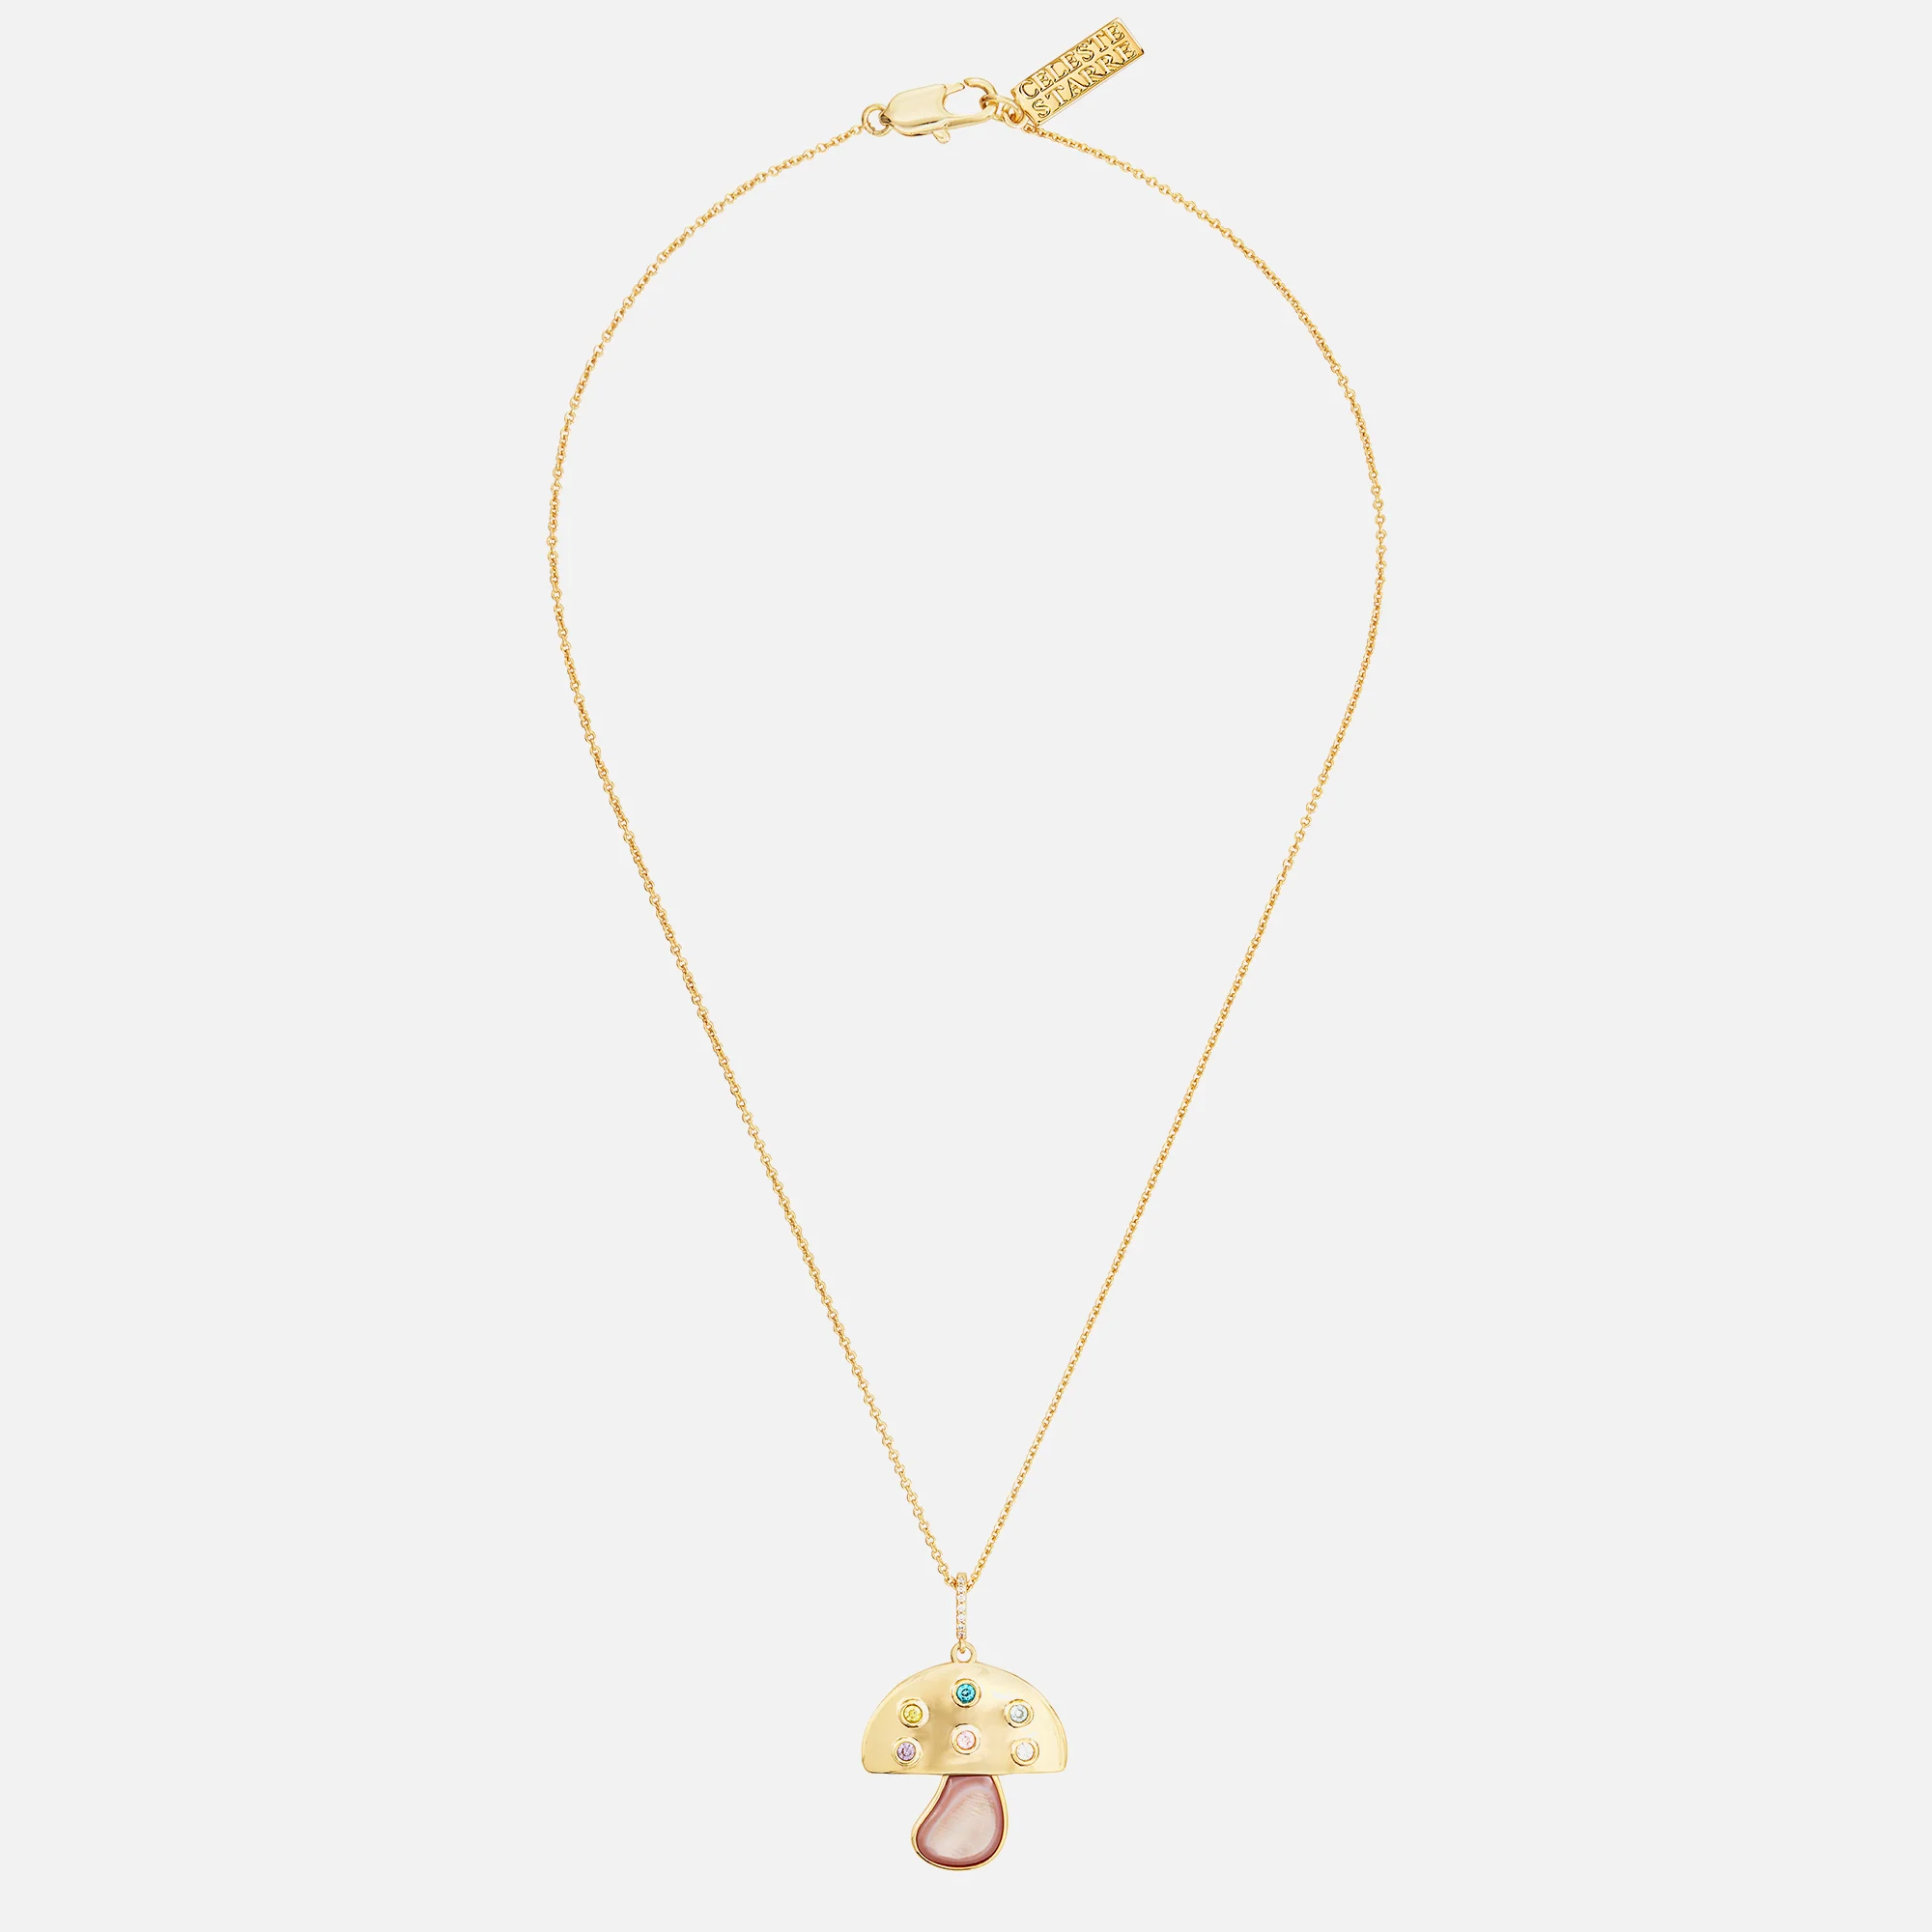 Celeste Starre Women's The Wonderland Necklace - Gold Image 1